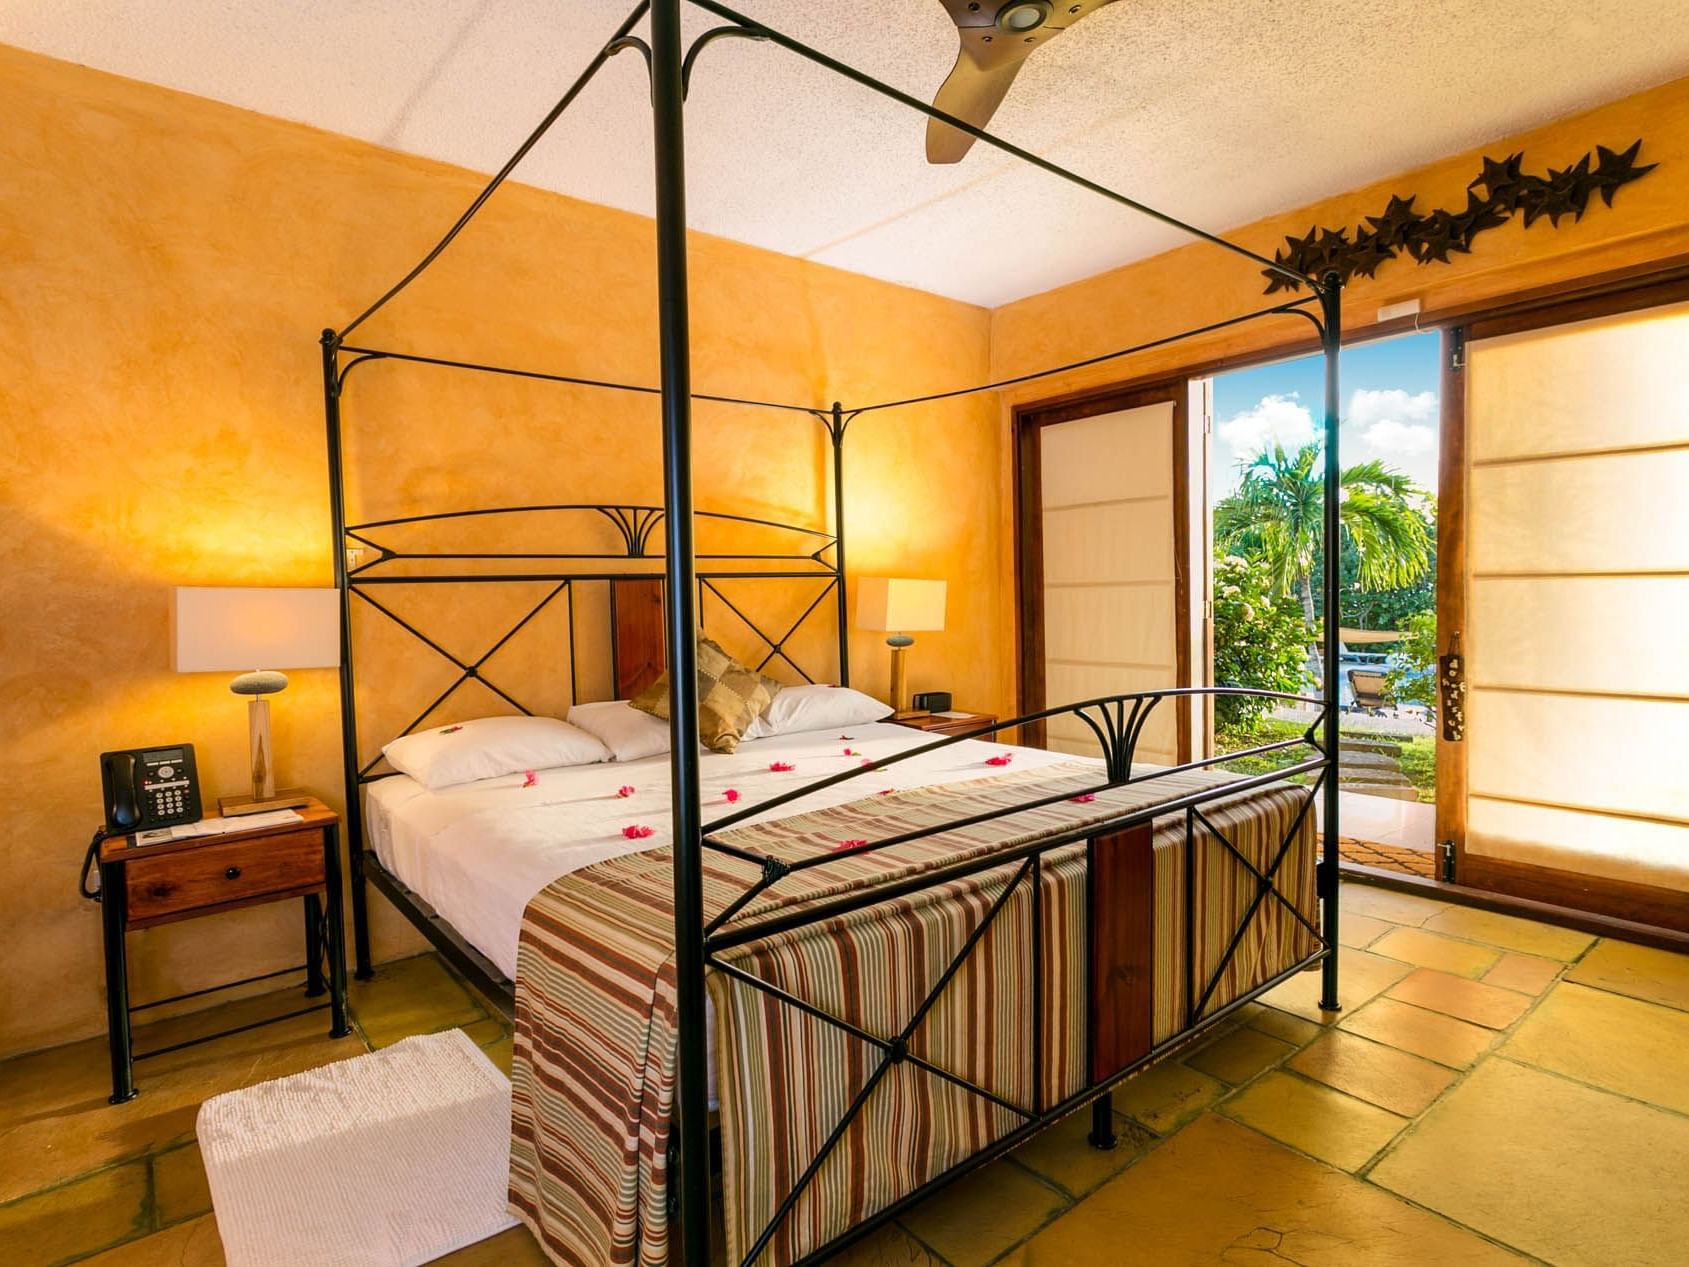 Bedroom arrangement in a Villa at True Blue Bay Resort